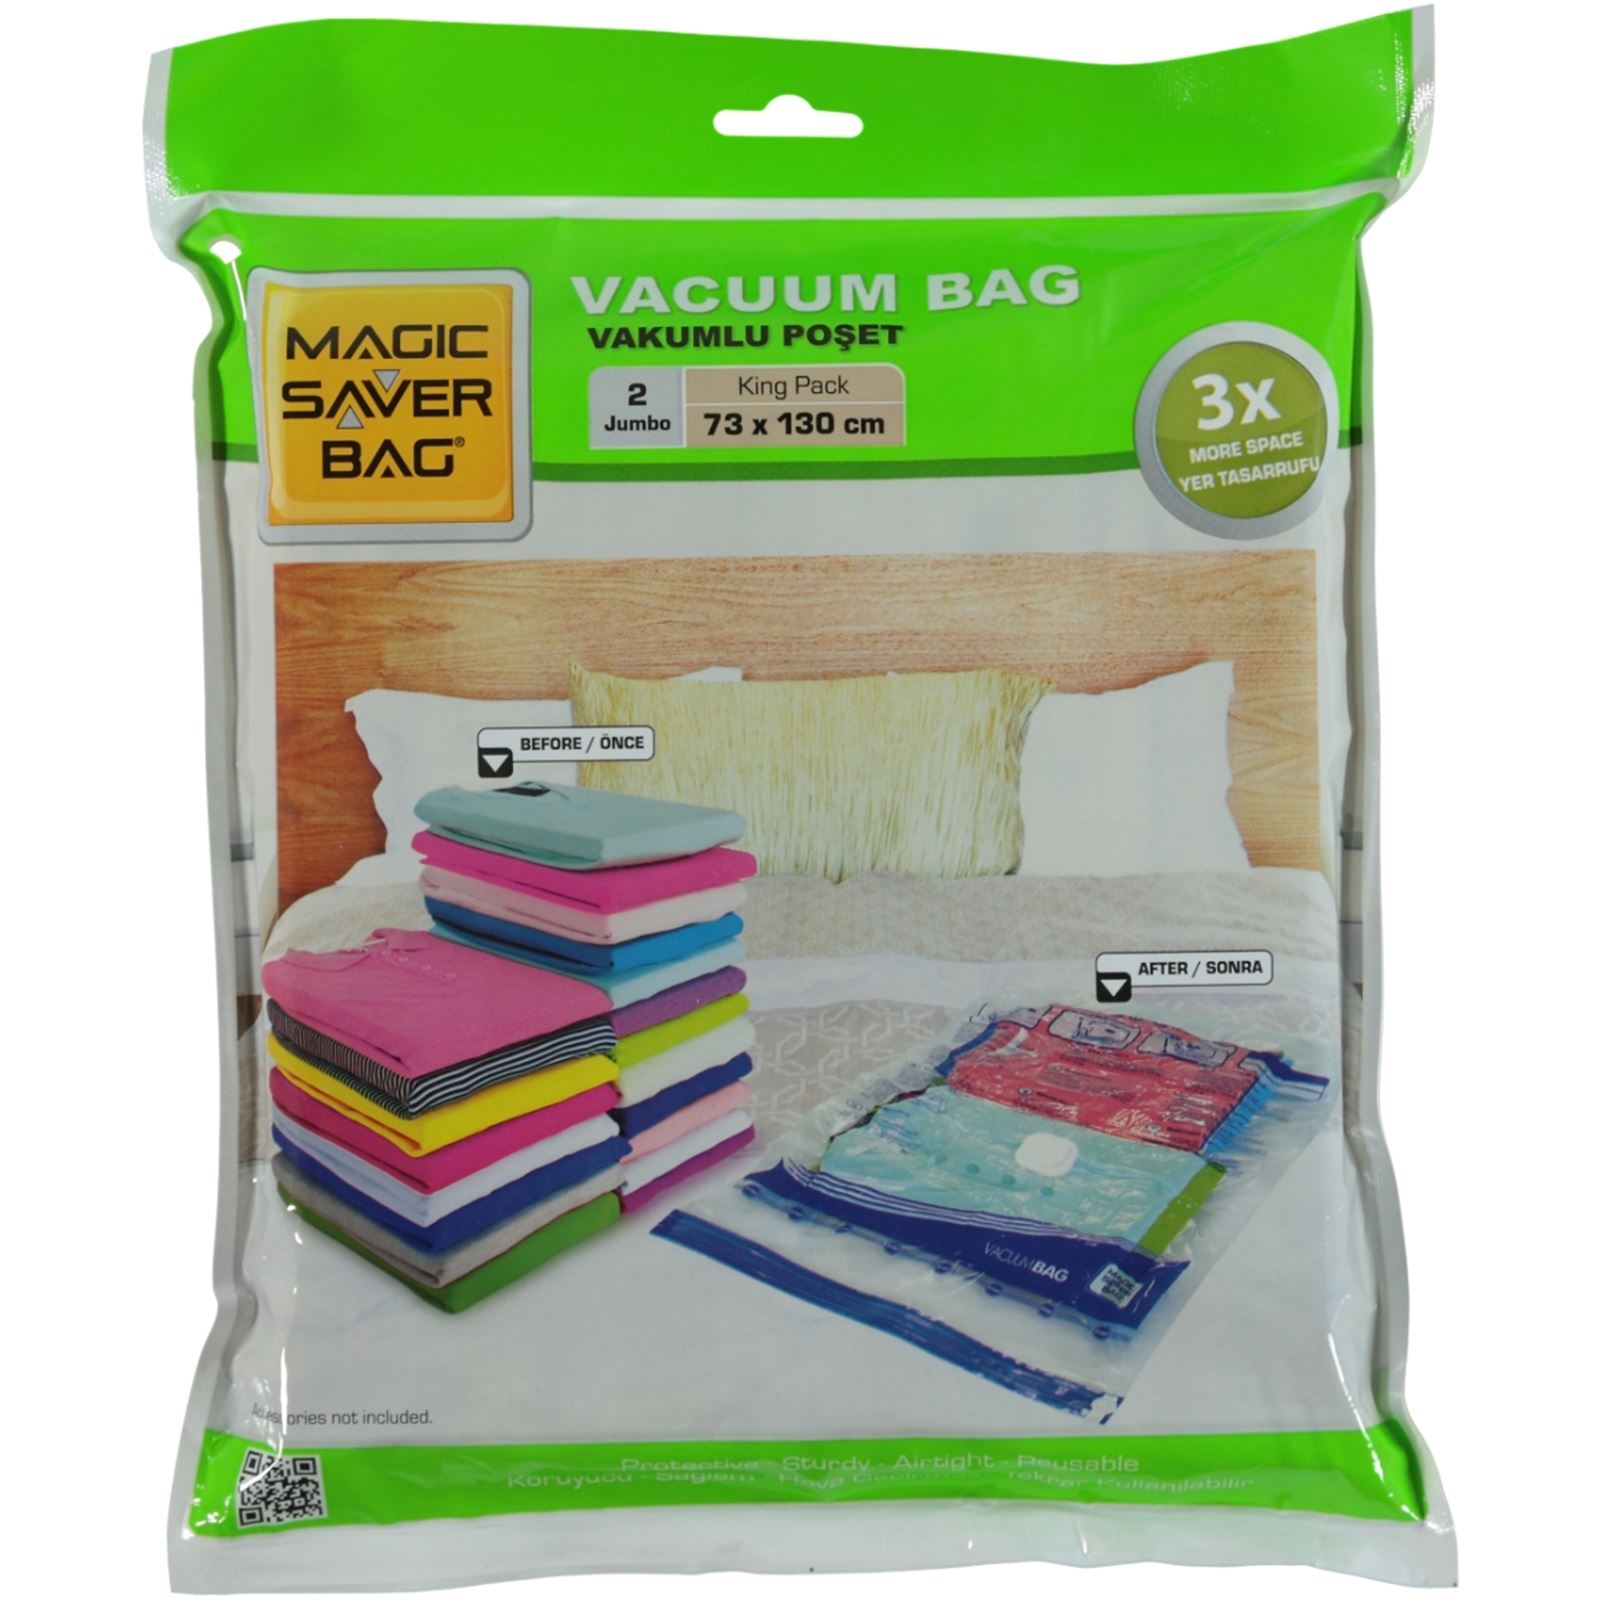 Magic Saver Bag Vakumlu Poşet 73x130 Cm